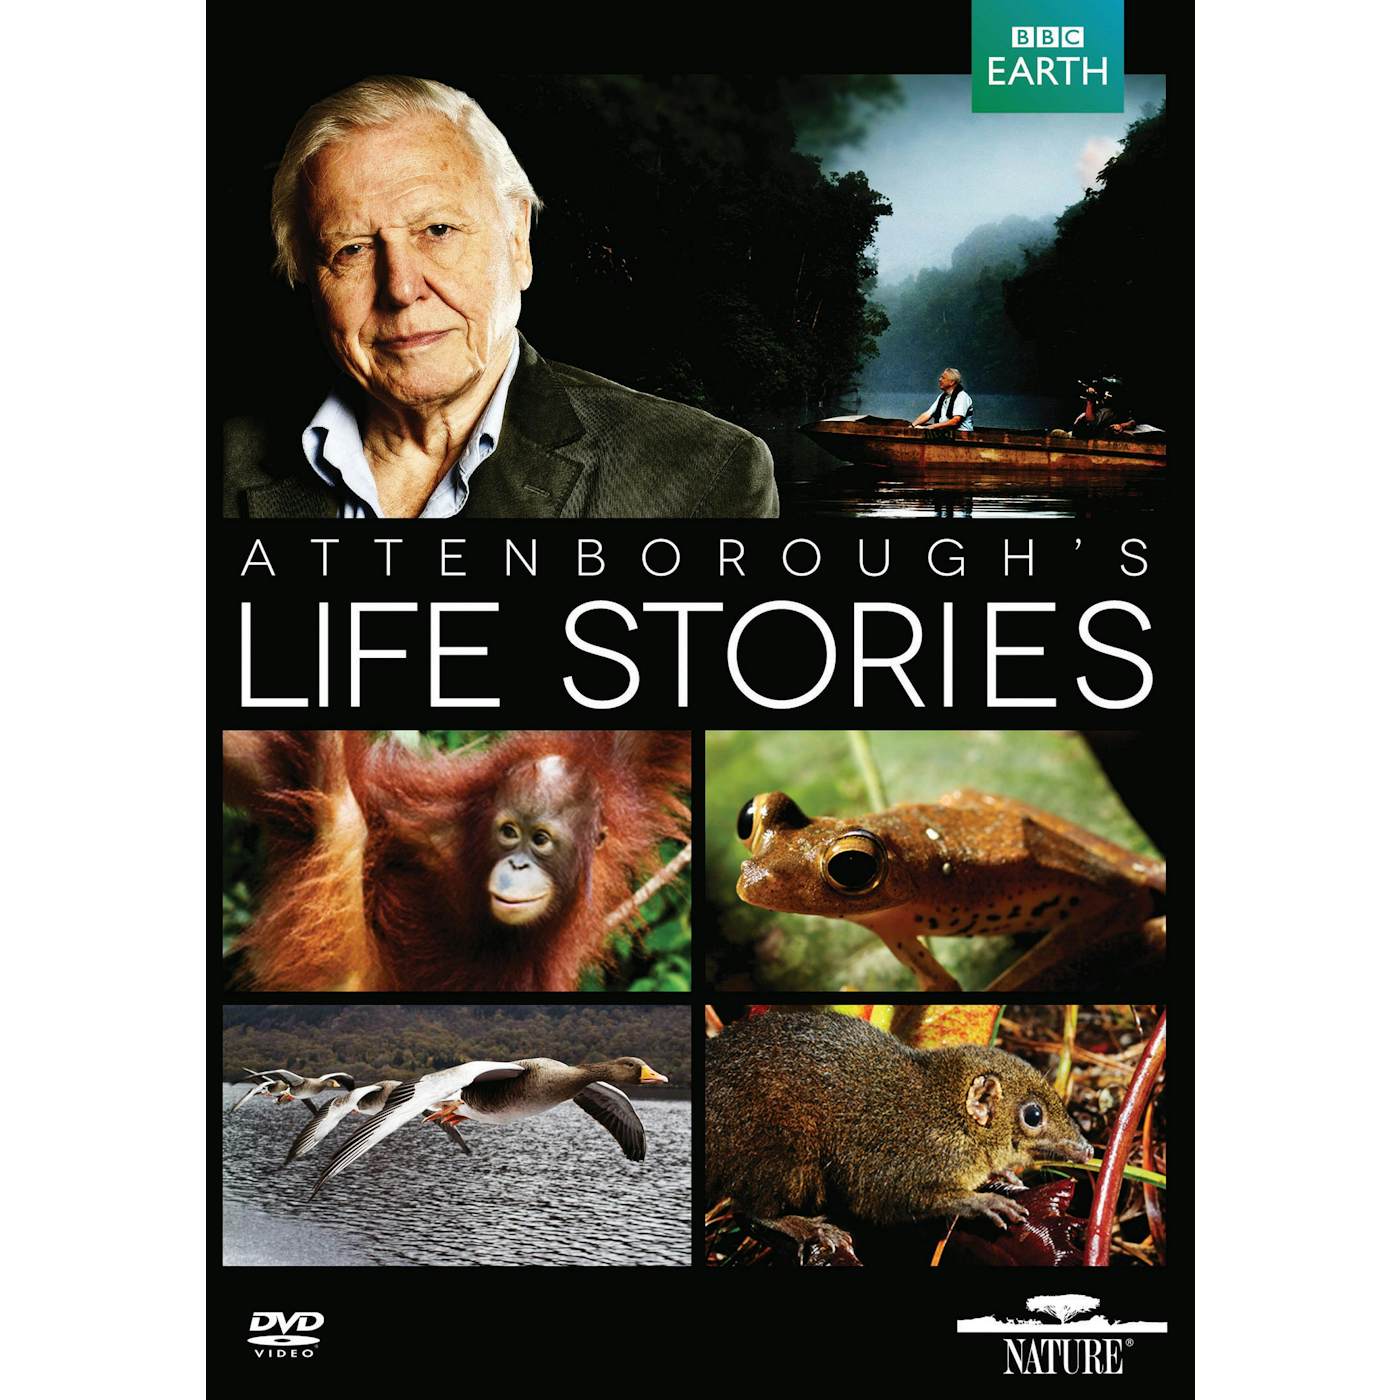 David Attenborough LIFE STORIES DVD